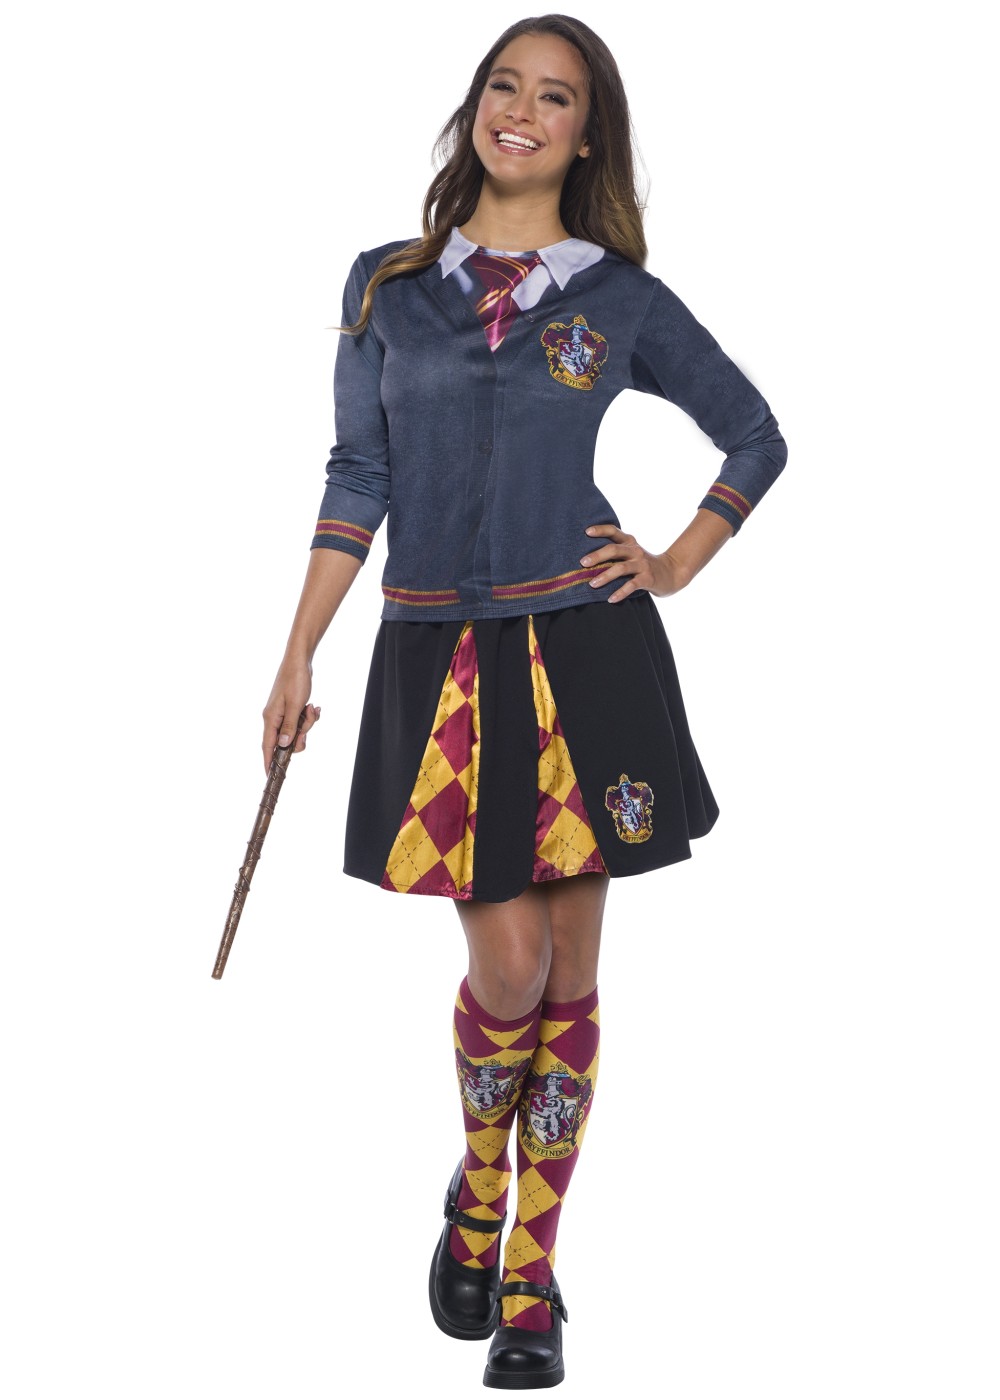 Gryffindor Harry Potter Costume Top